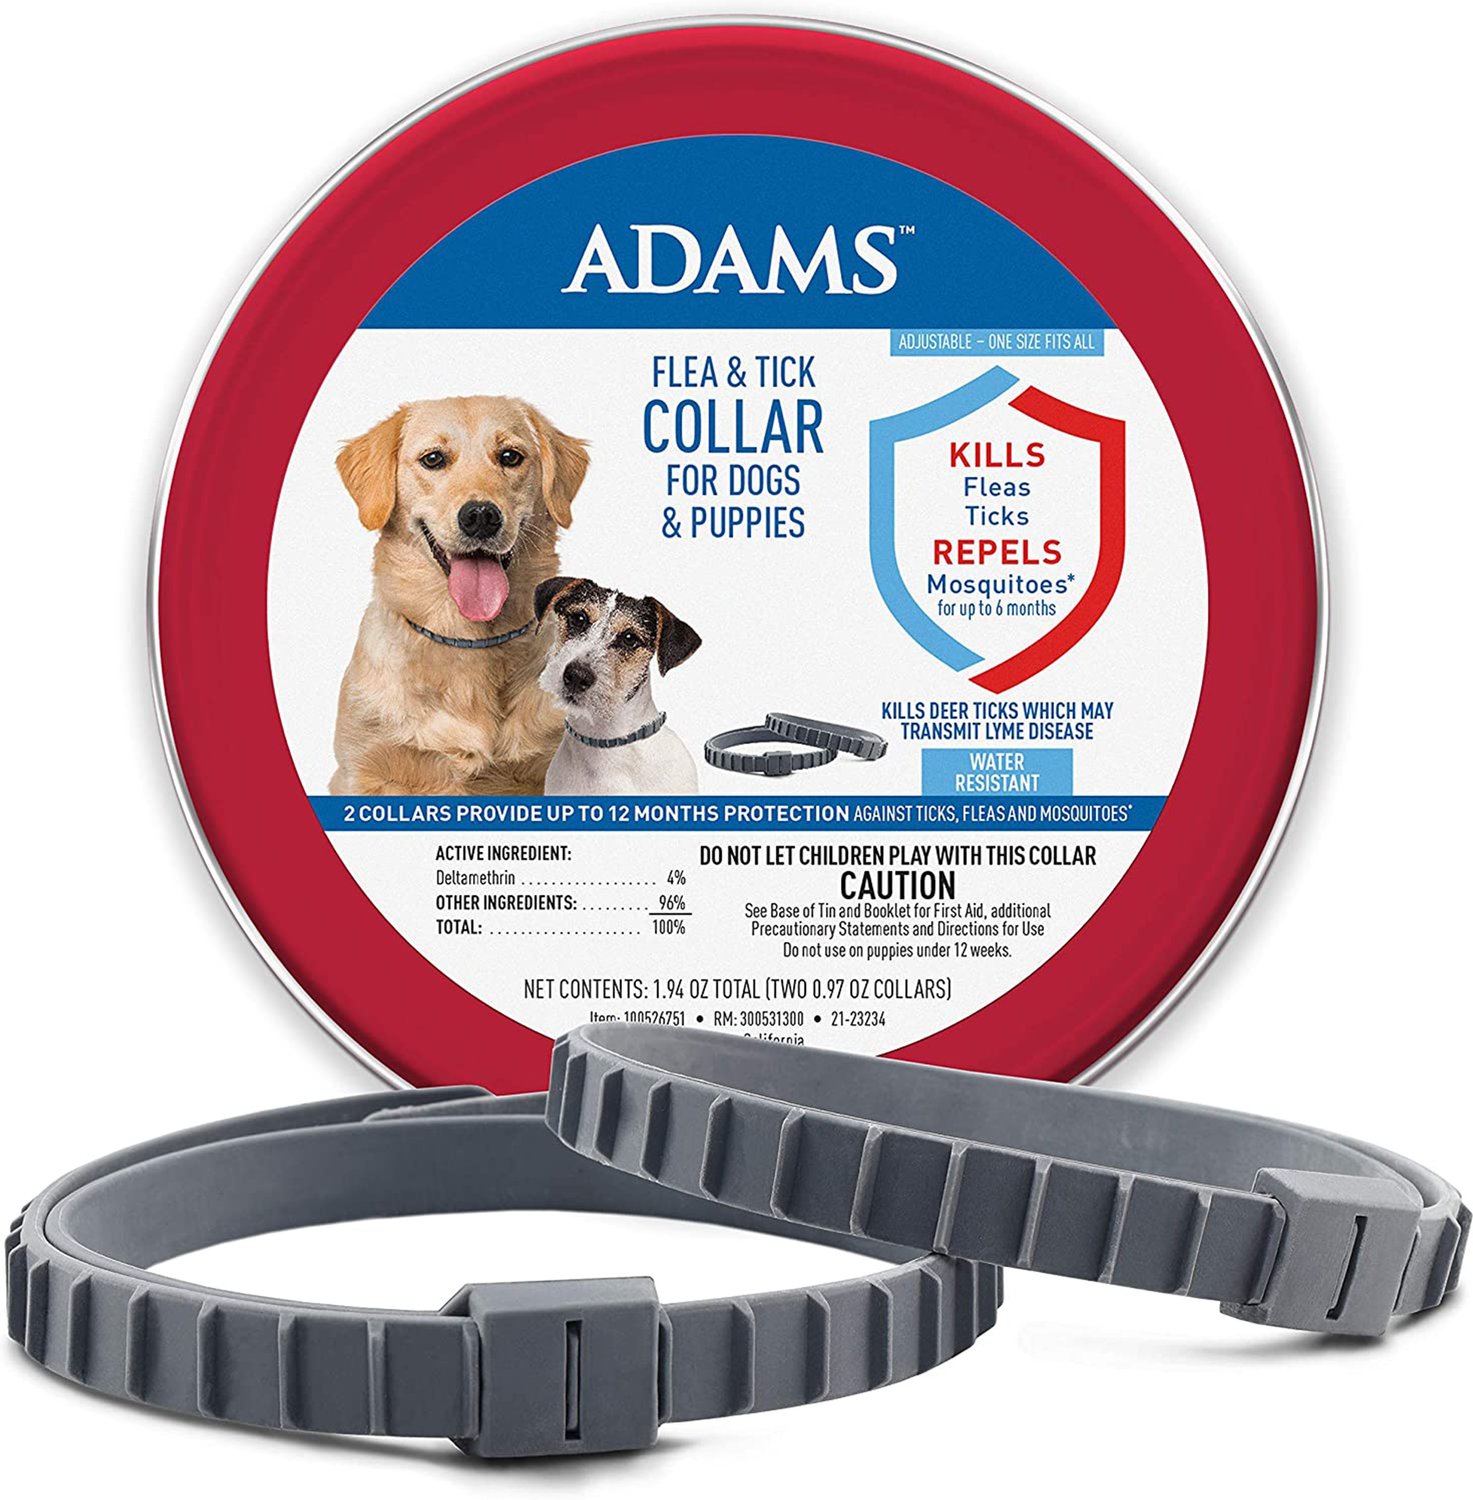 ADAMS Flea & Tick Collar for Dogs & Puppies, 2 Collars (12mos. supply